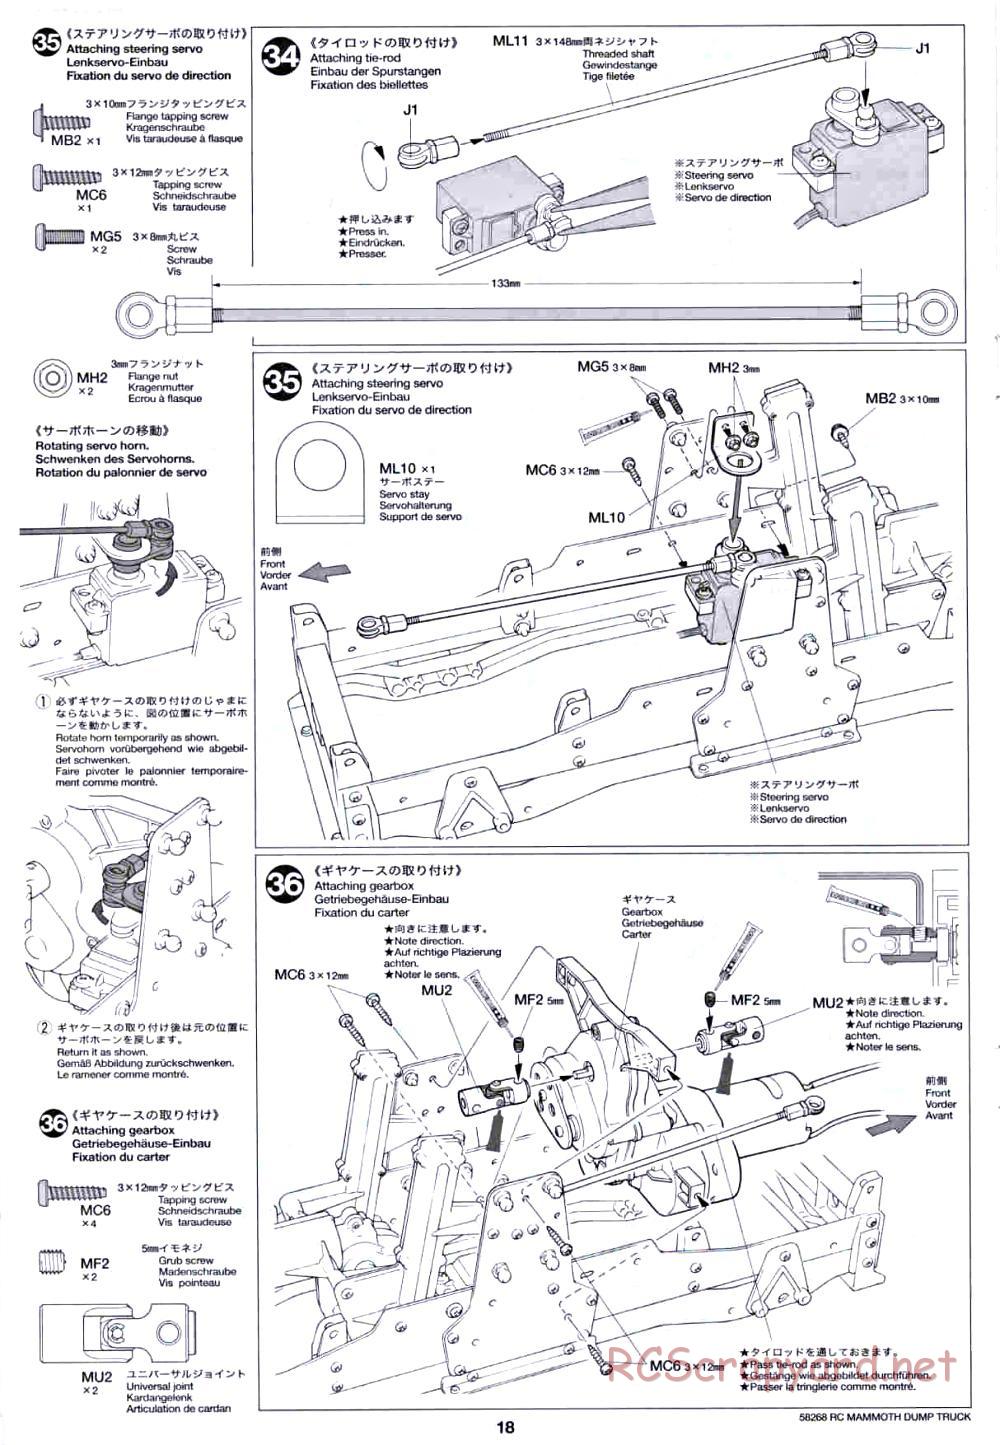 Tamiya - Mammoth Dump Truck Chassis - Manual - Page 18